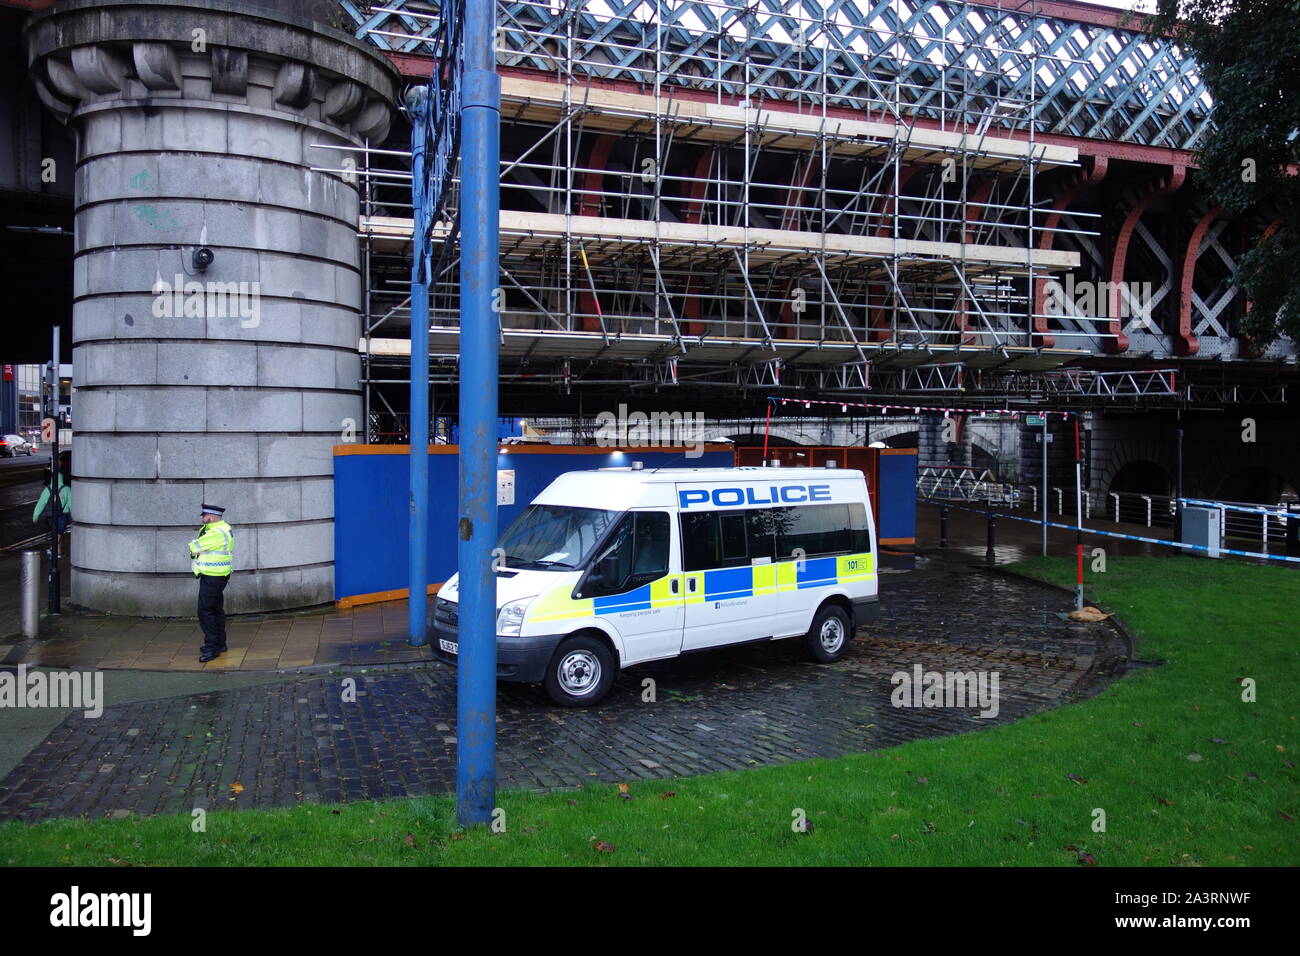 Glasgow, UK, 10th October 2019 : Police investigates an overnight incident reported in vicinity of the Glasgow Bridge near Clyde. Credit: Pawel Pietraszewski / Alamy Live News Stock Photo